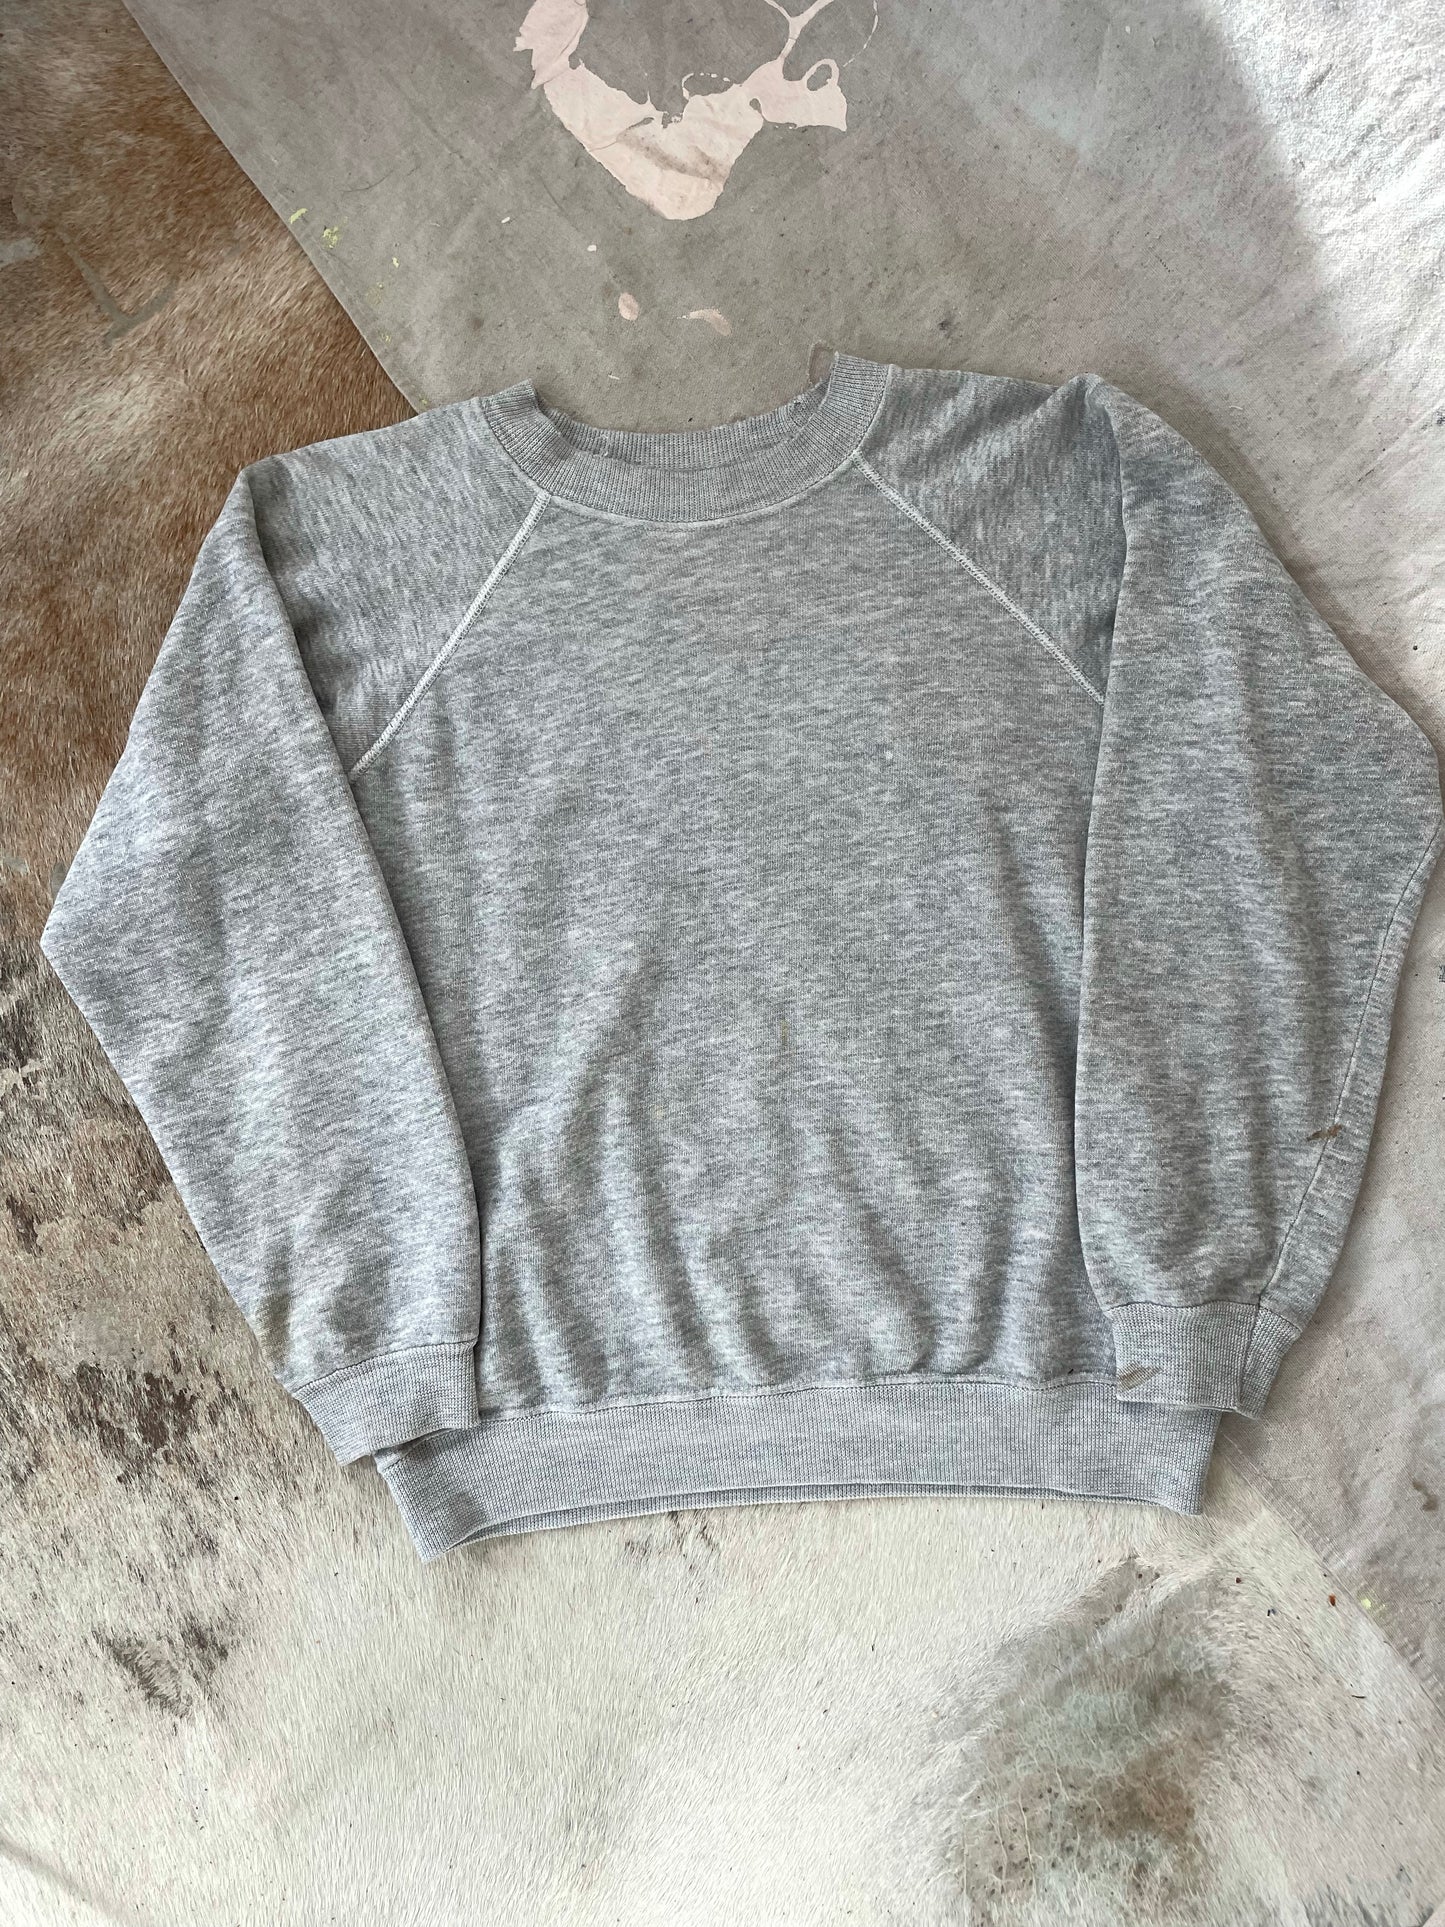 80s/90s Blank Grey Hanes Sweatshirt